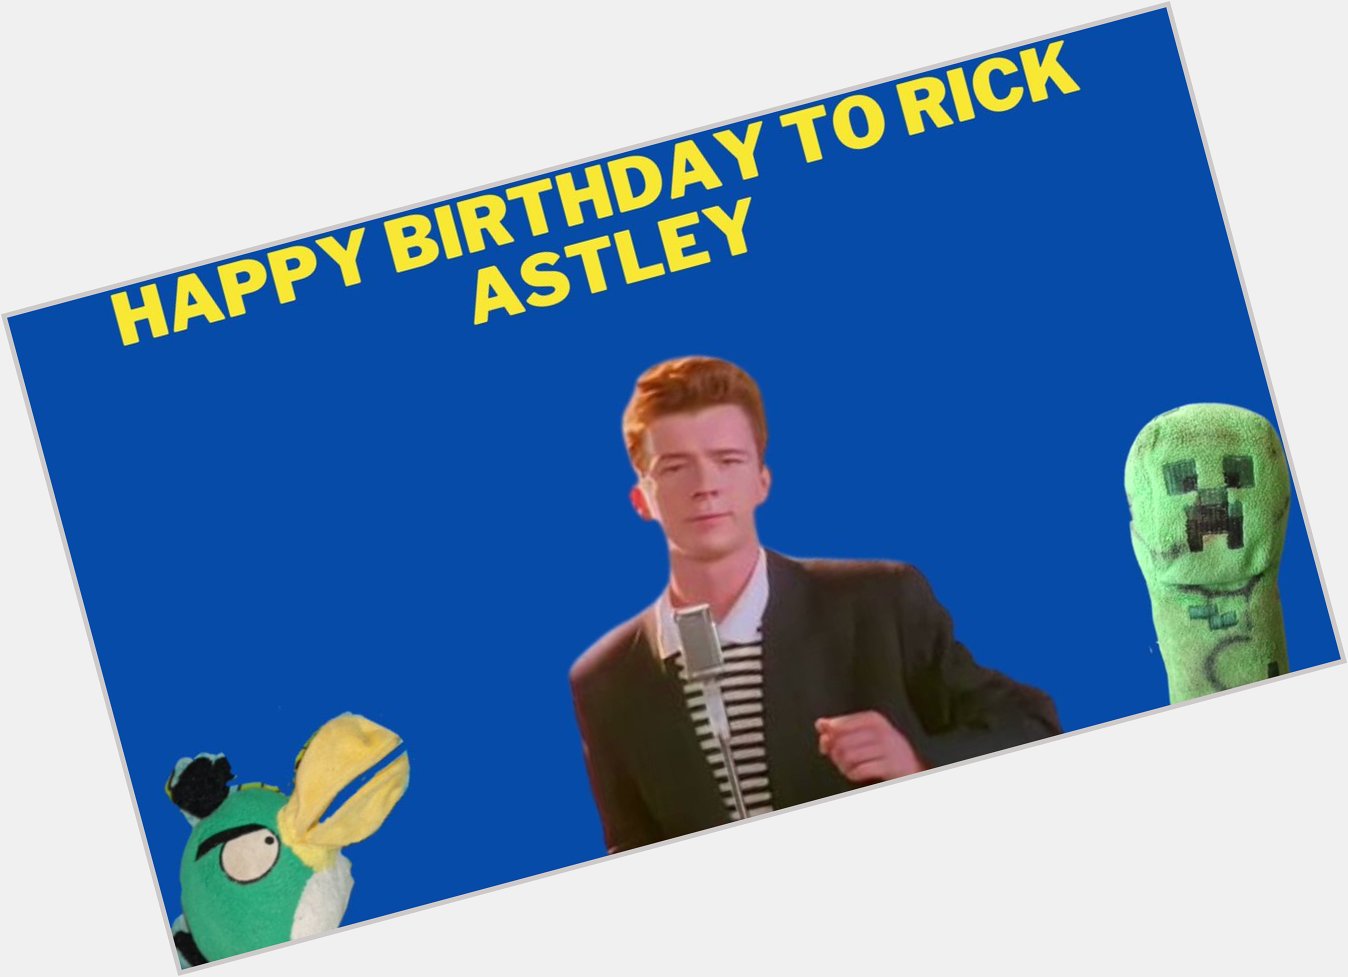 Happy birthday to Rick Astley 